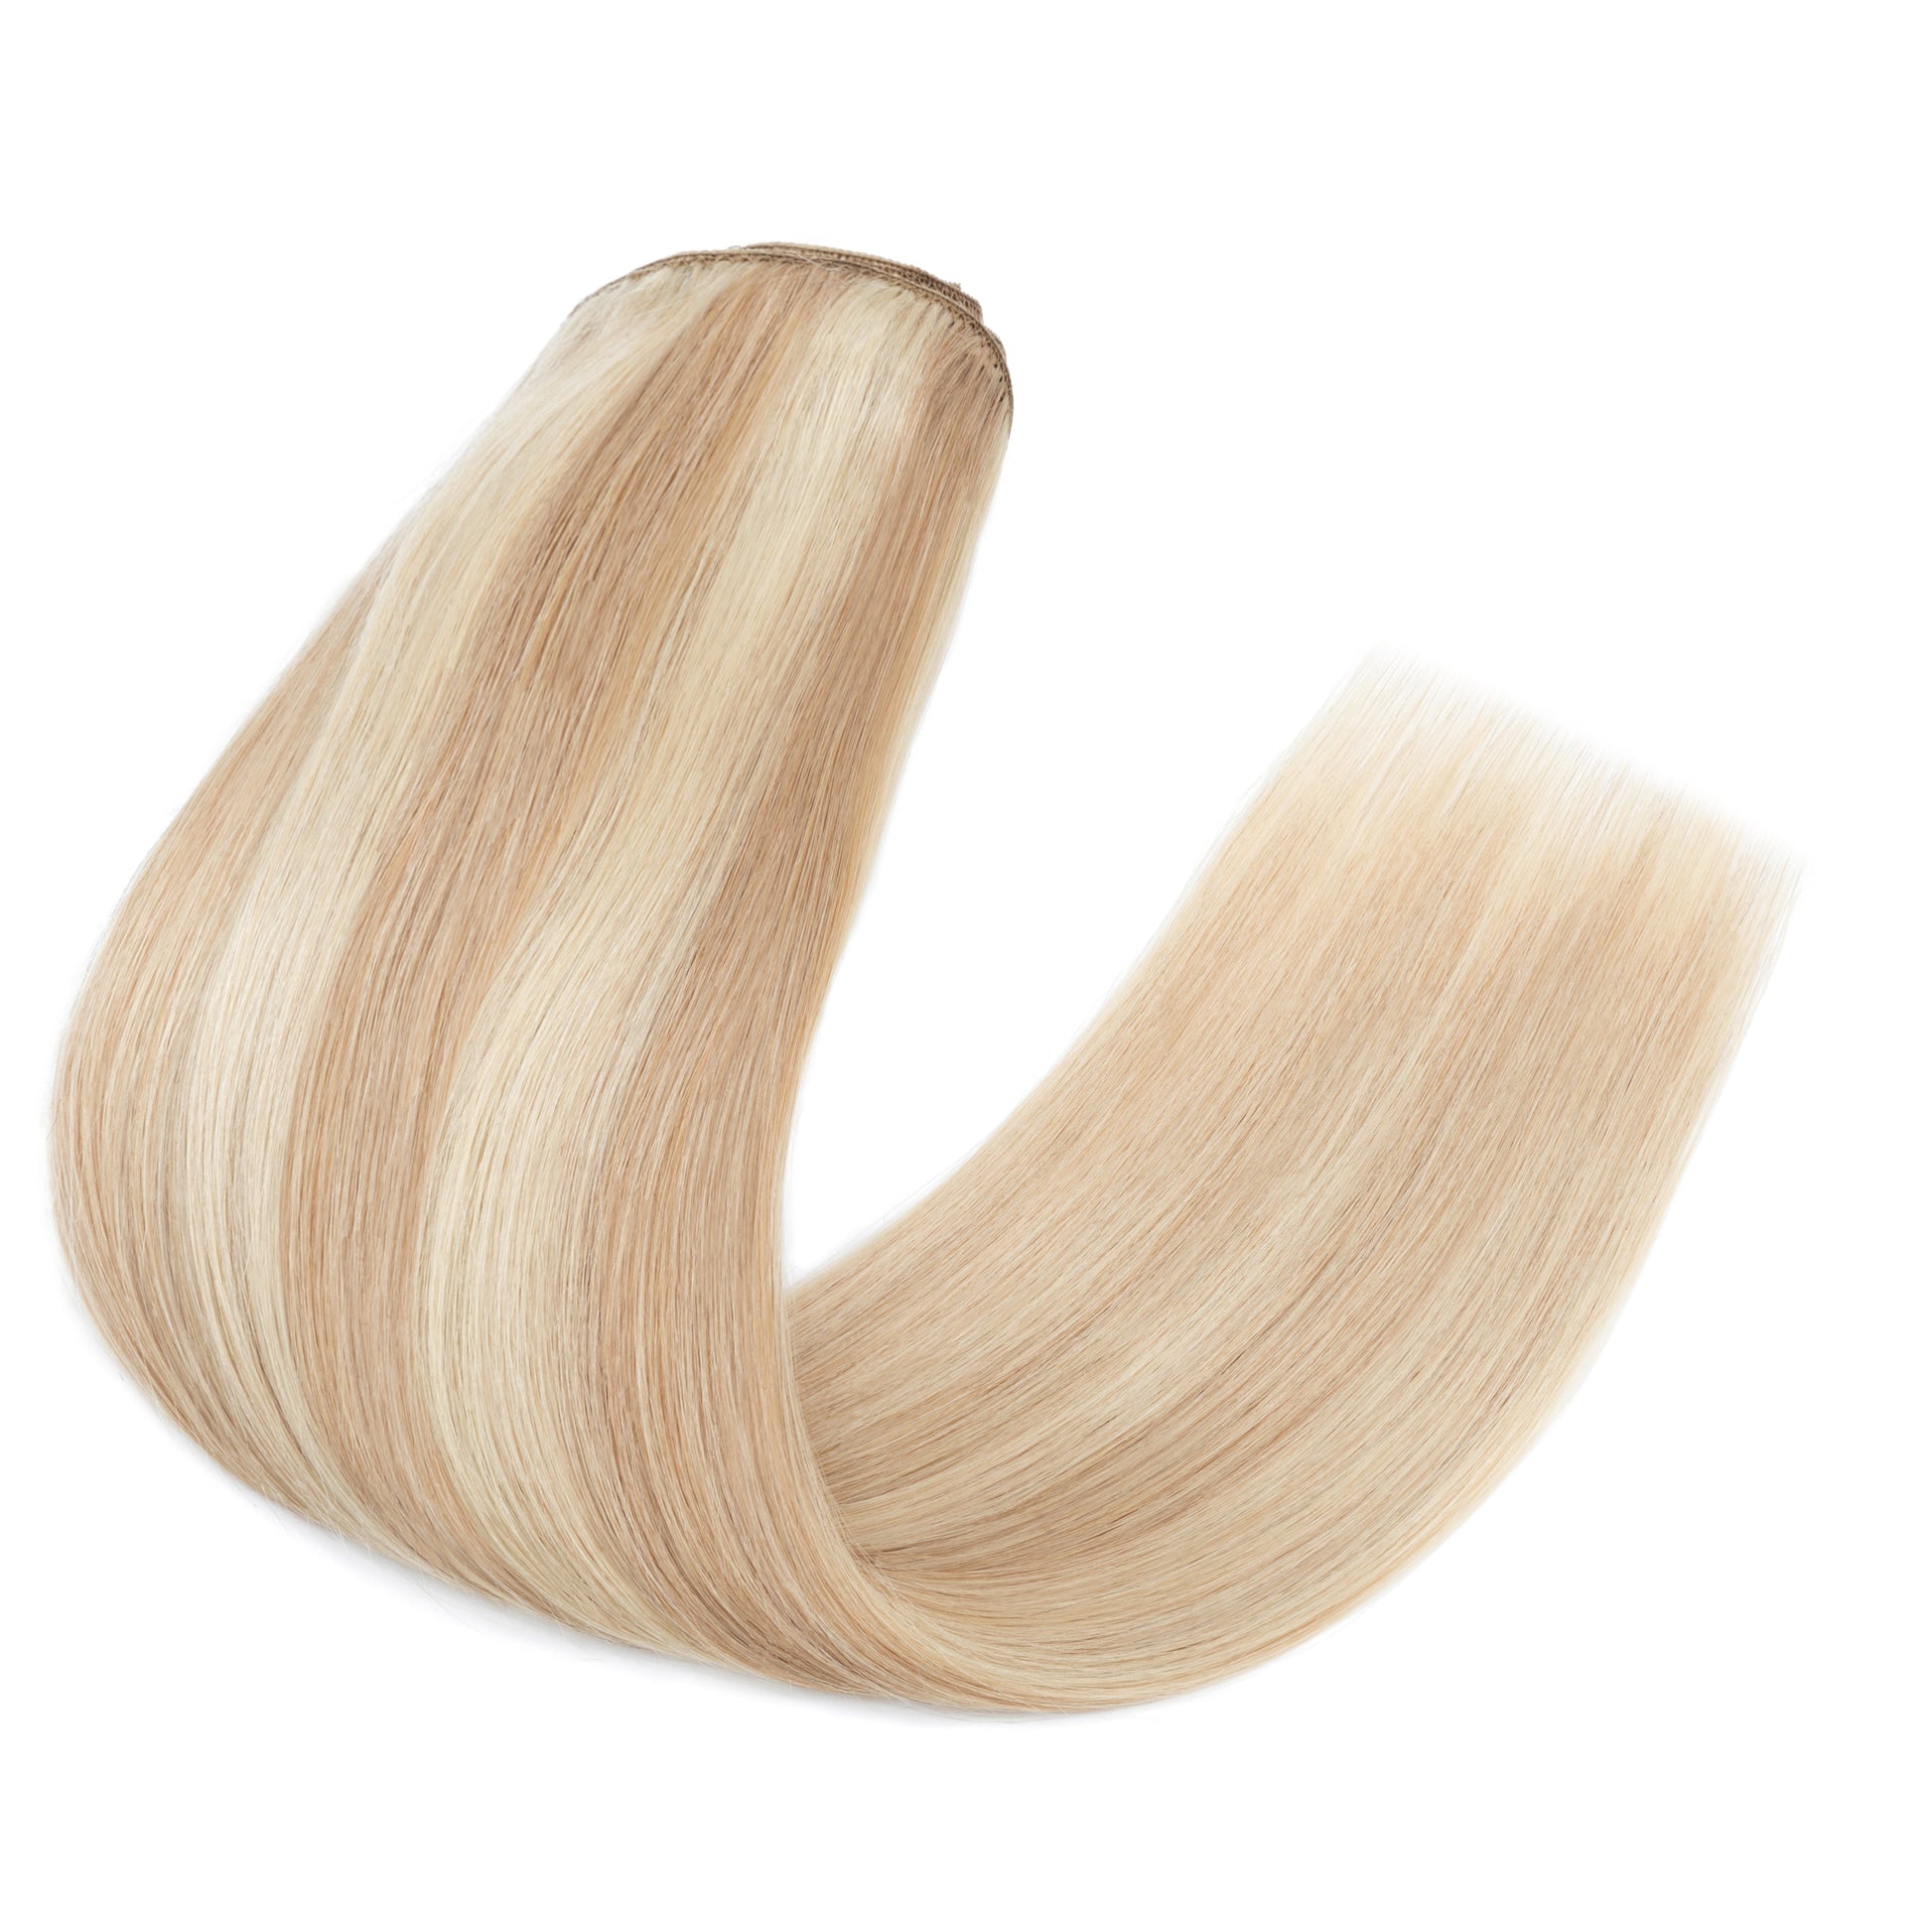 SEGOHAIR 8pcs Clip In Hair Extensions Real Human Hair Dark Blonde mixed Blonde segohair.com